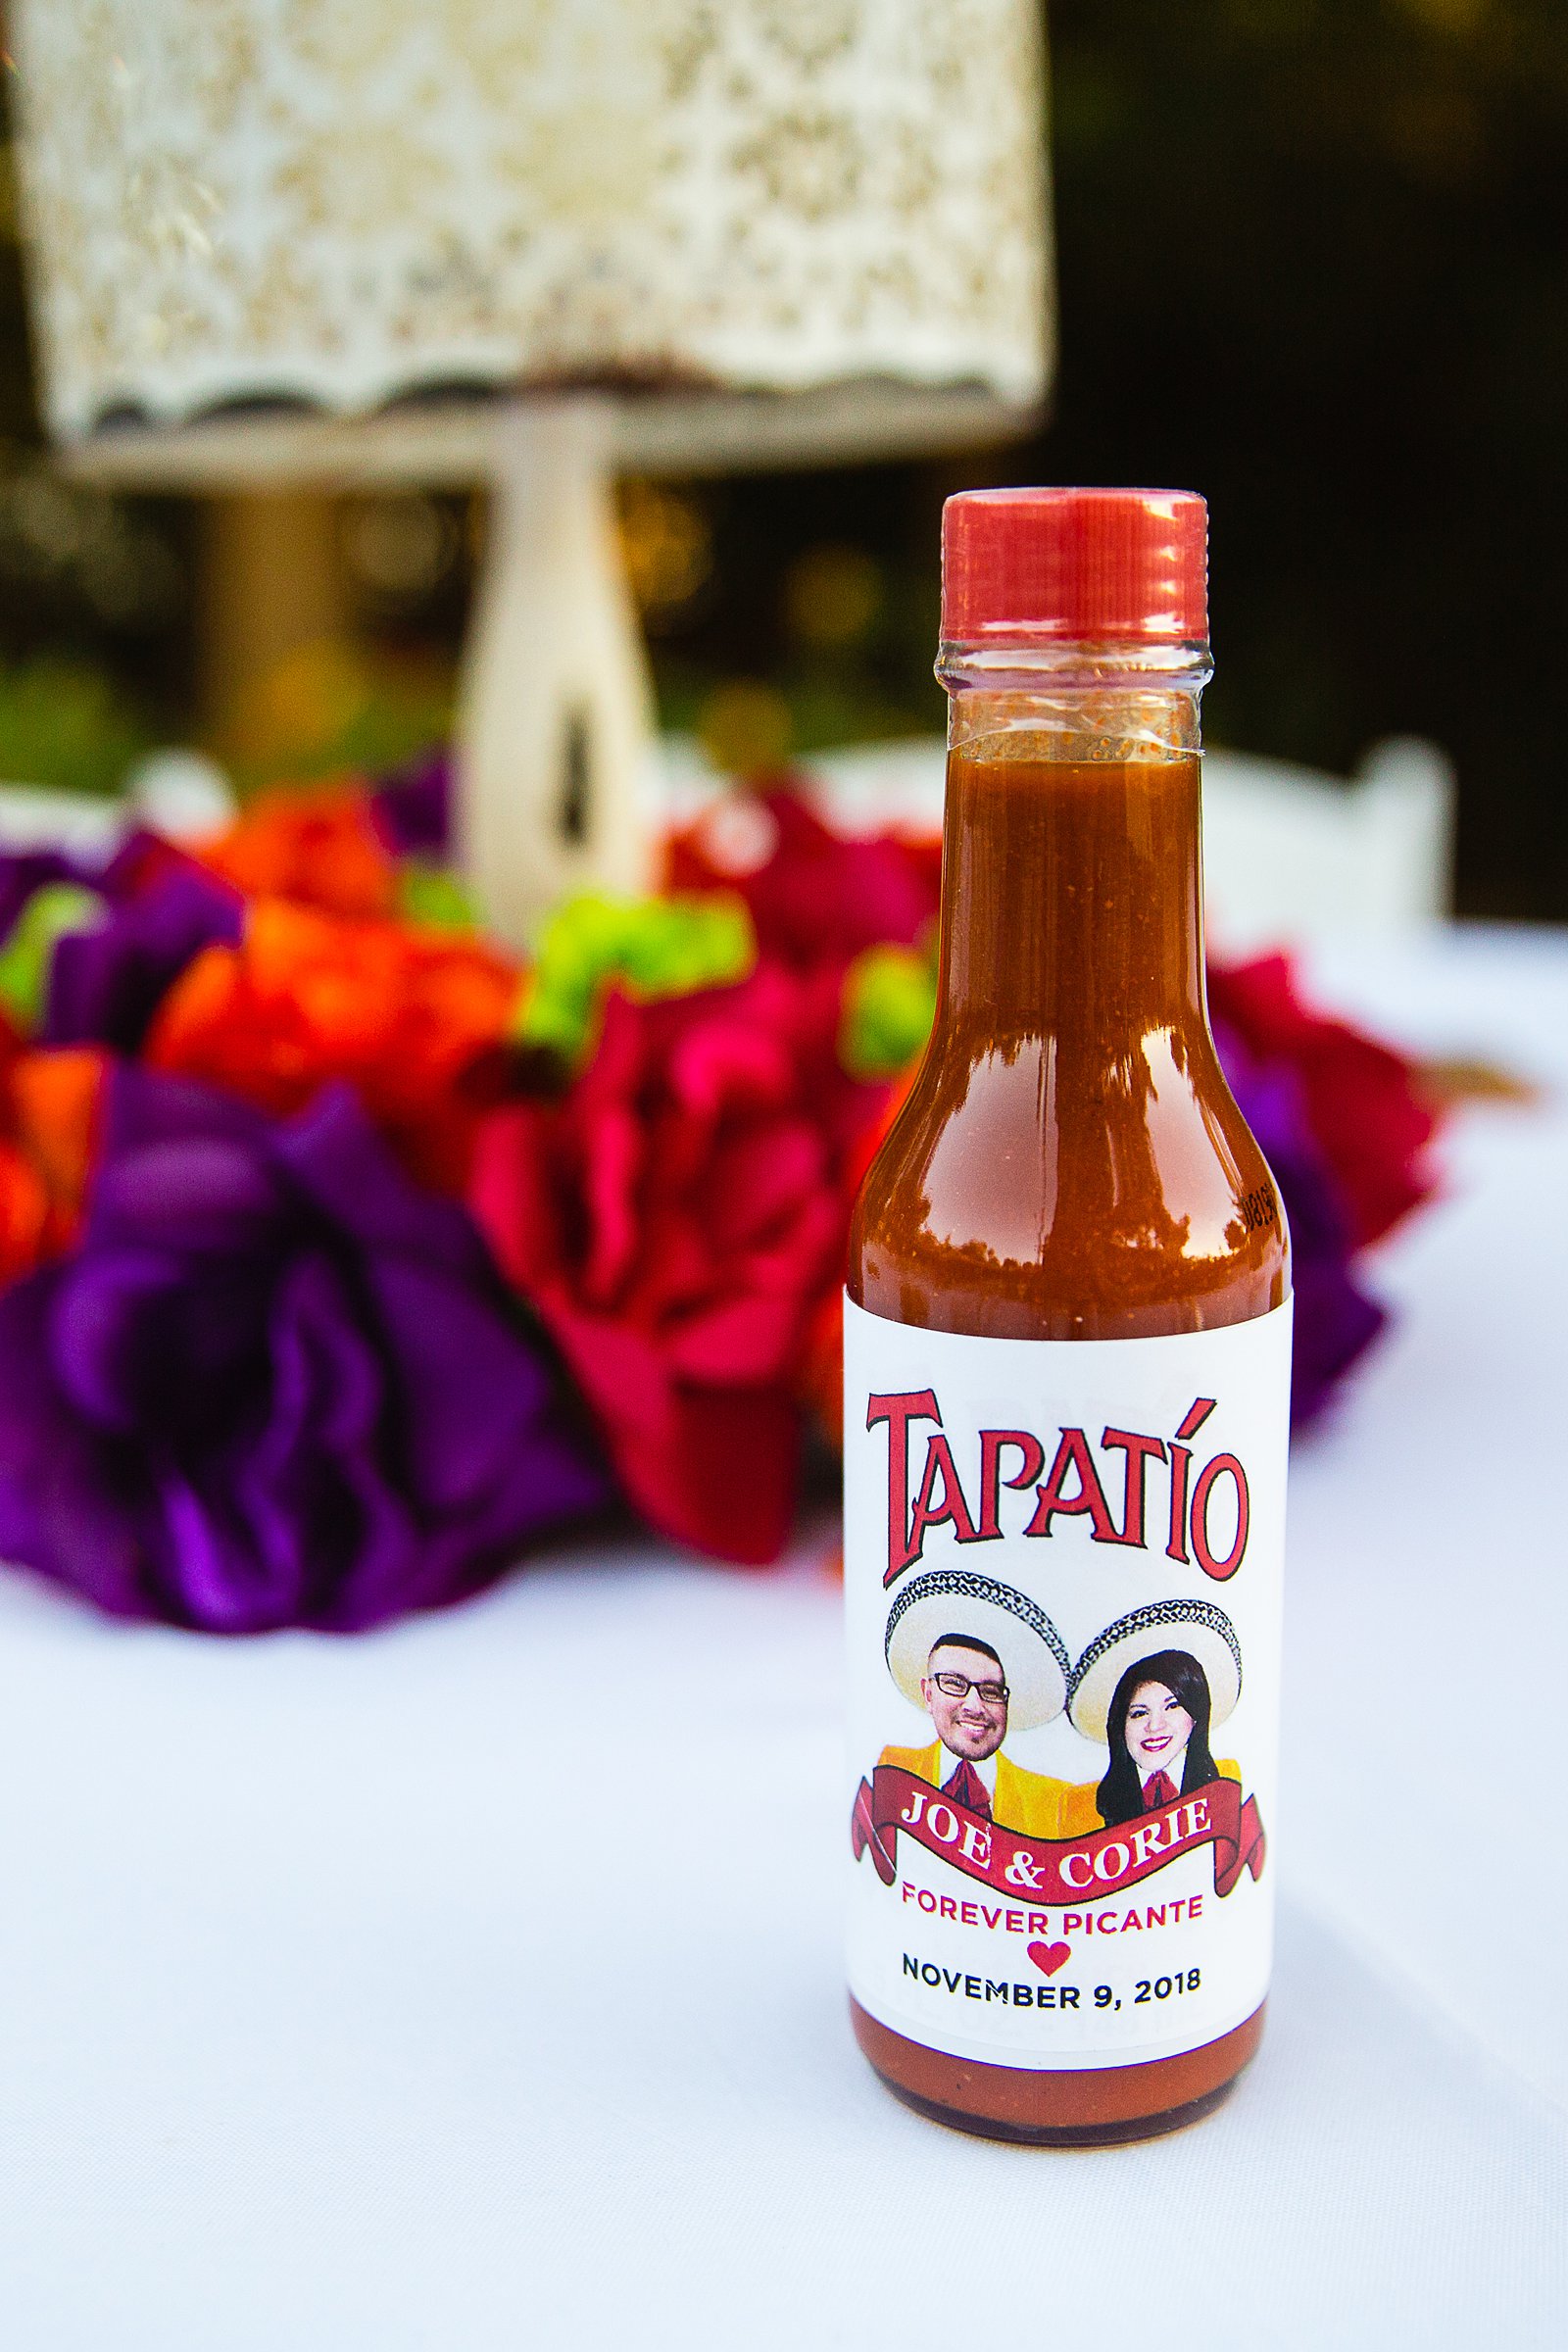 Custom Tapatio sauce at fiesta wedding reception by Arizona wedding photographer PMA Photography.